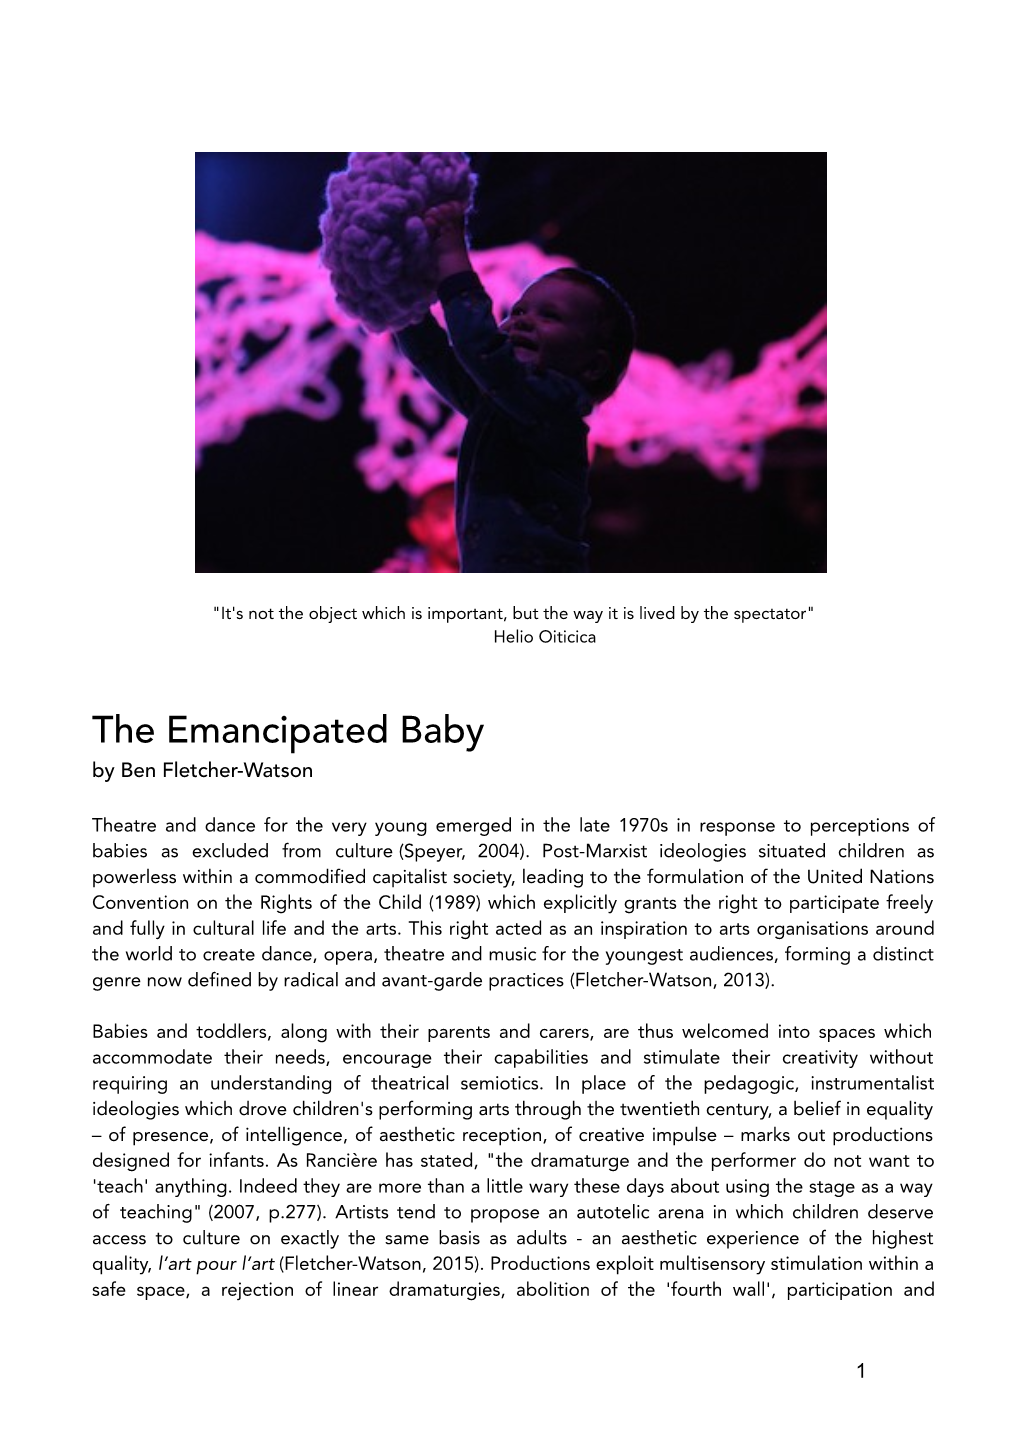 The Emancipated Baby by Ben Fletcher-Watson.Pdf